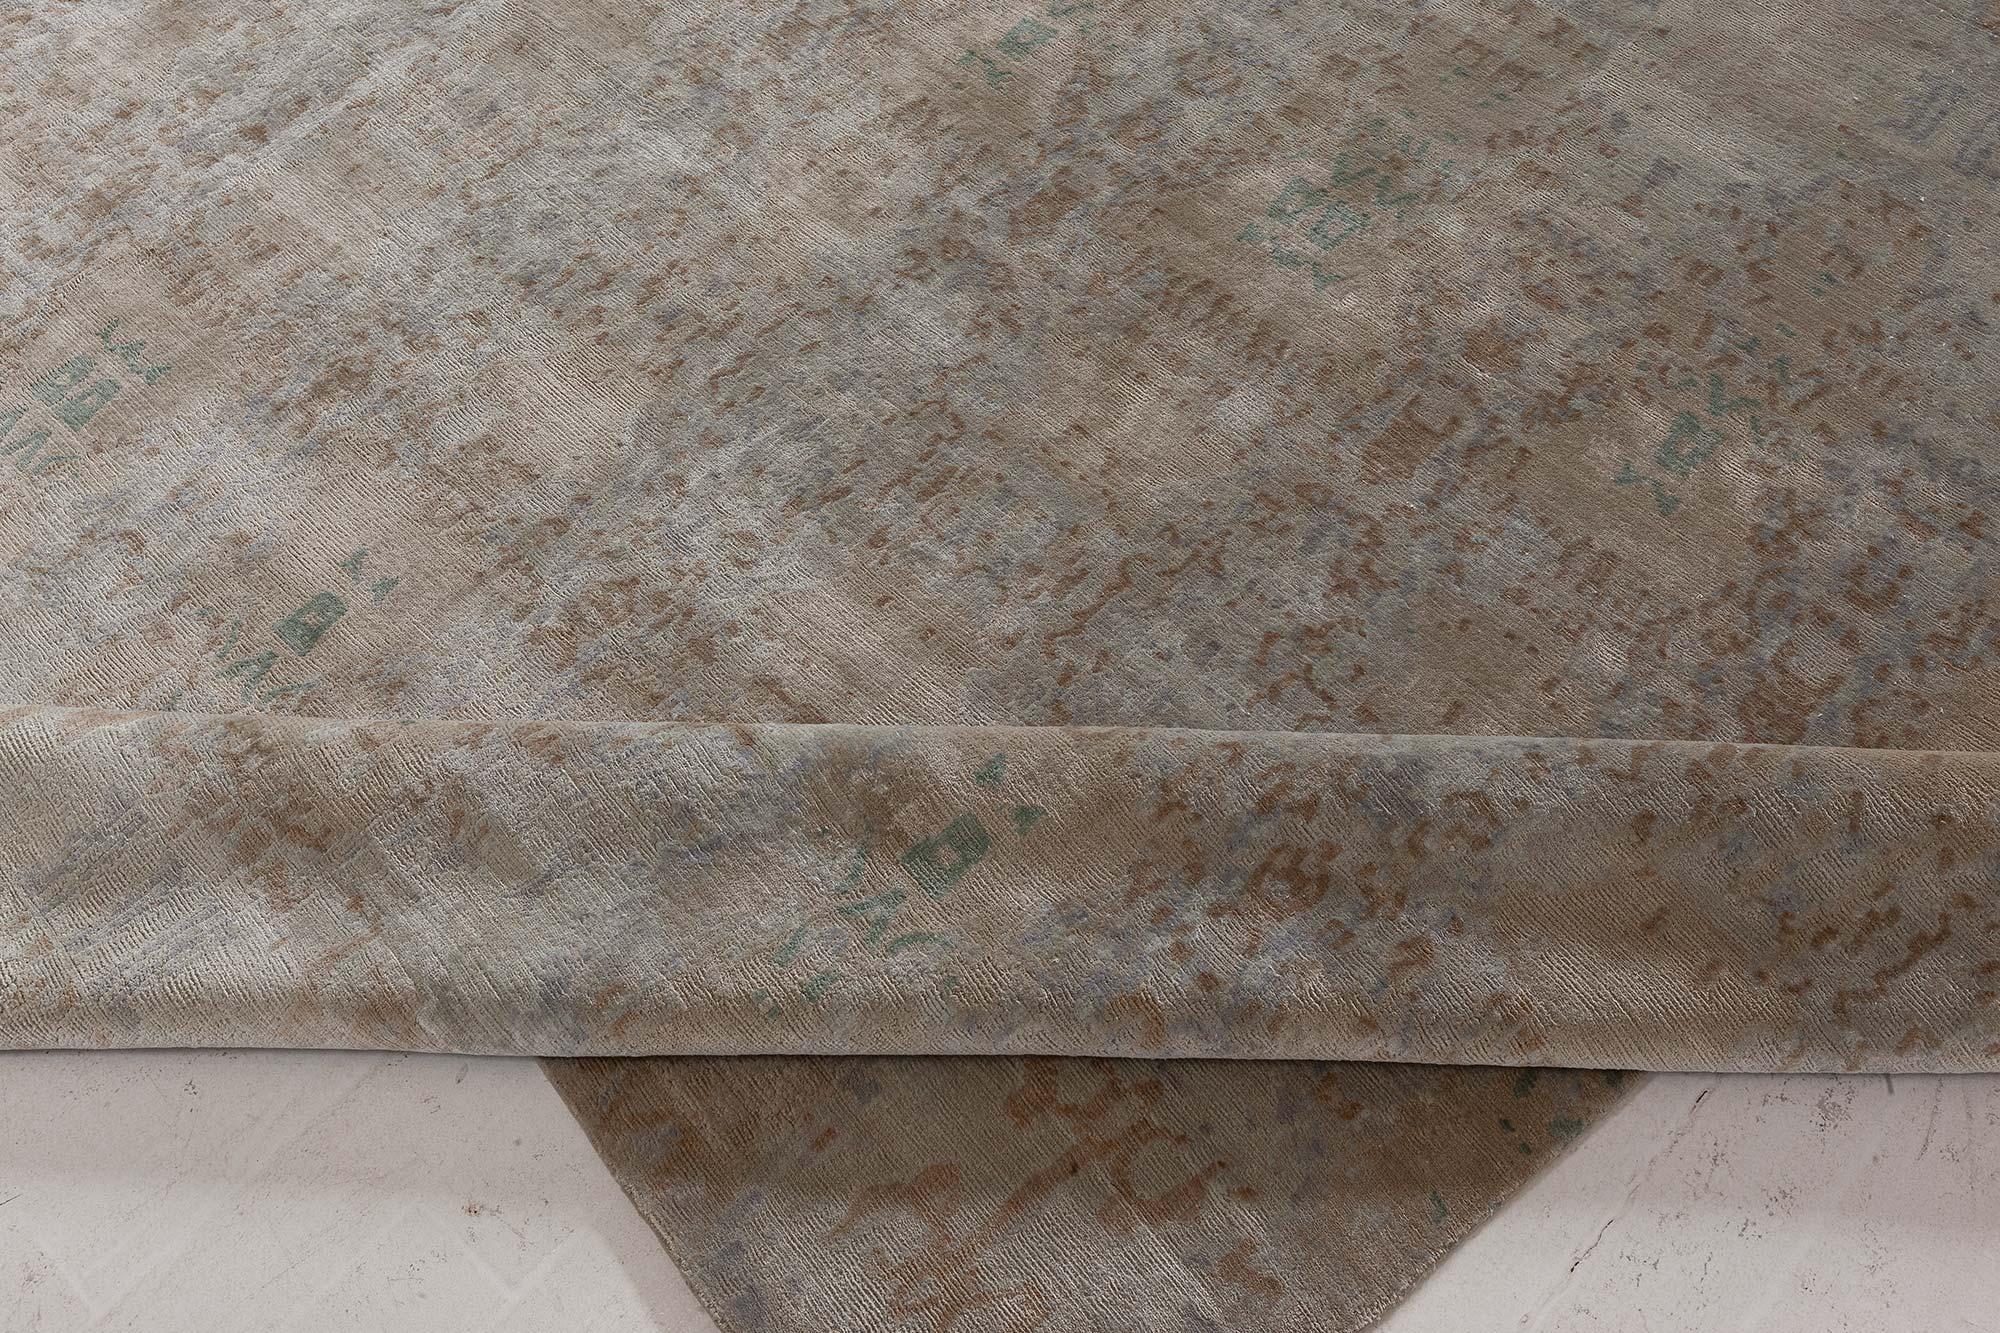 Modern Eskayel-Reflection handmade silk rug for Doris Leslie Blau.
Size: 12.0